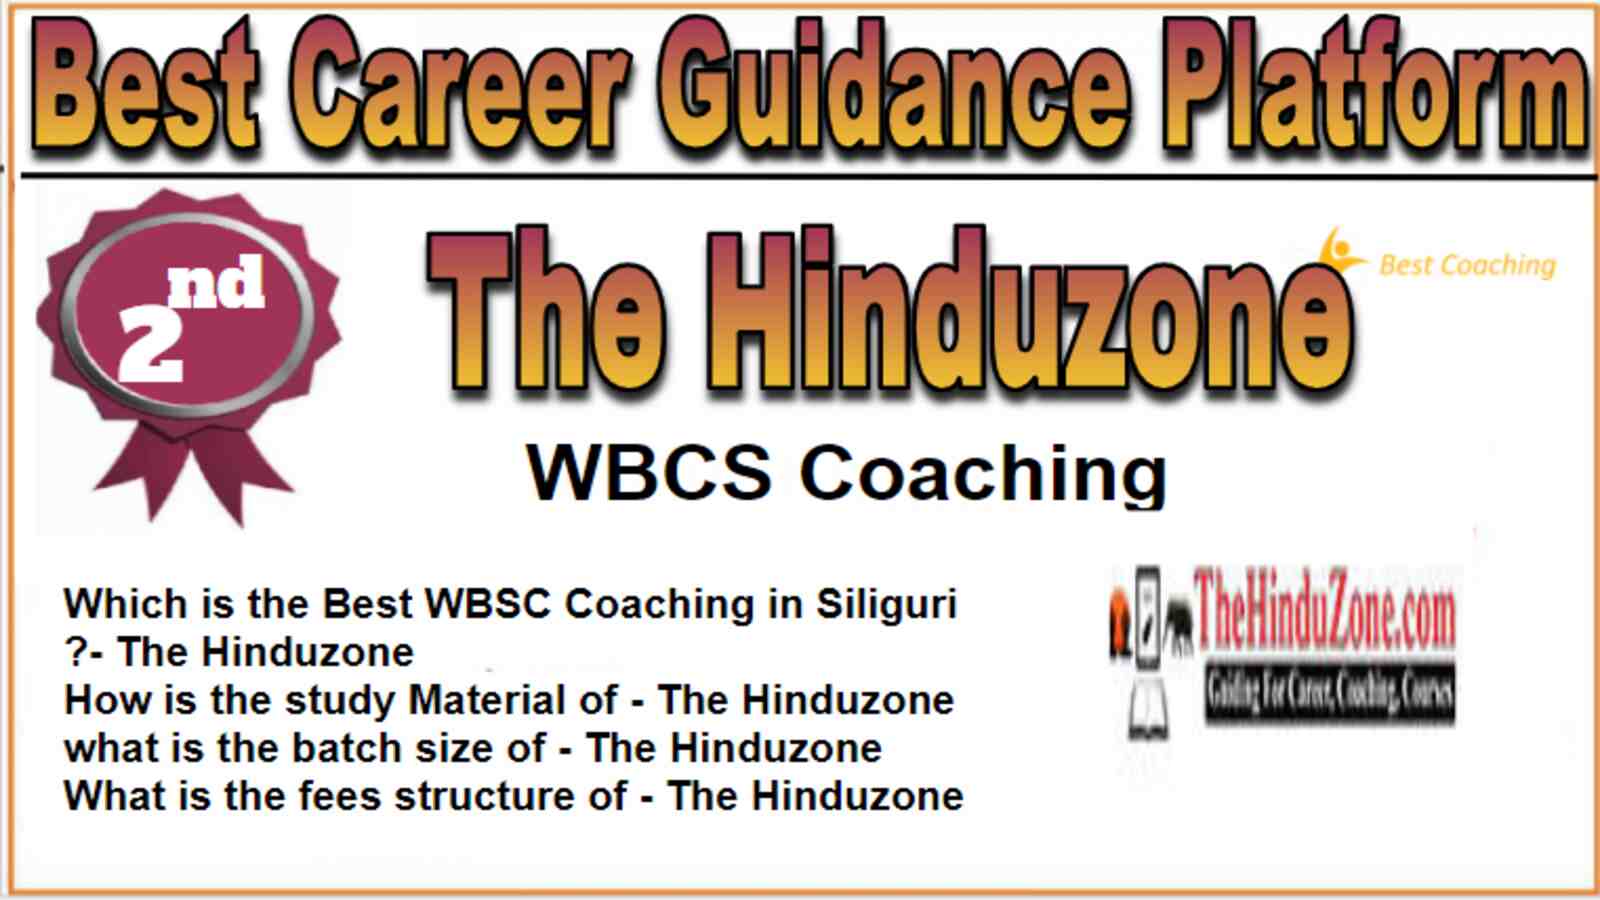 The Hinduzone - Best Career Guidance Platform